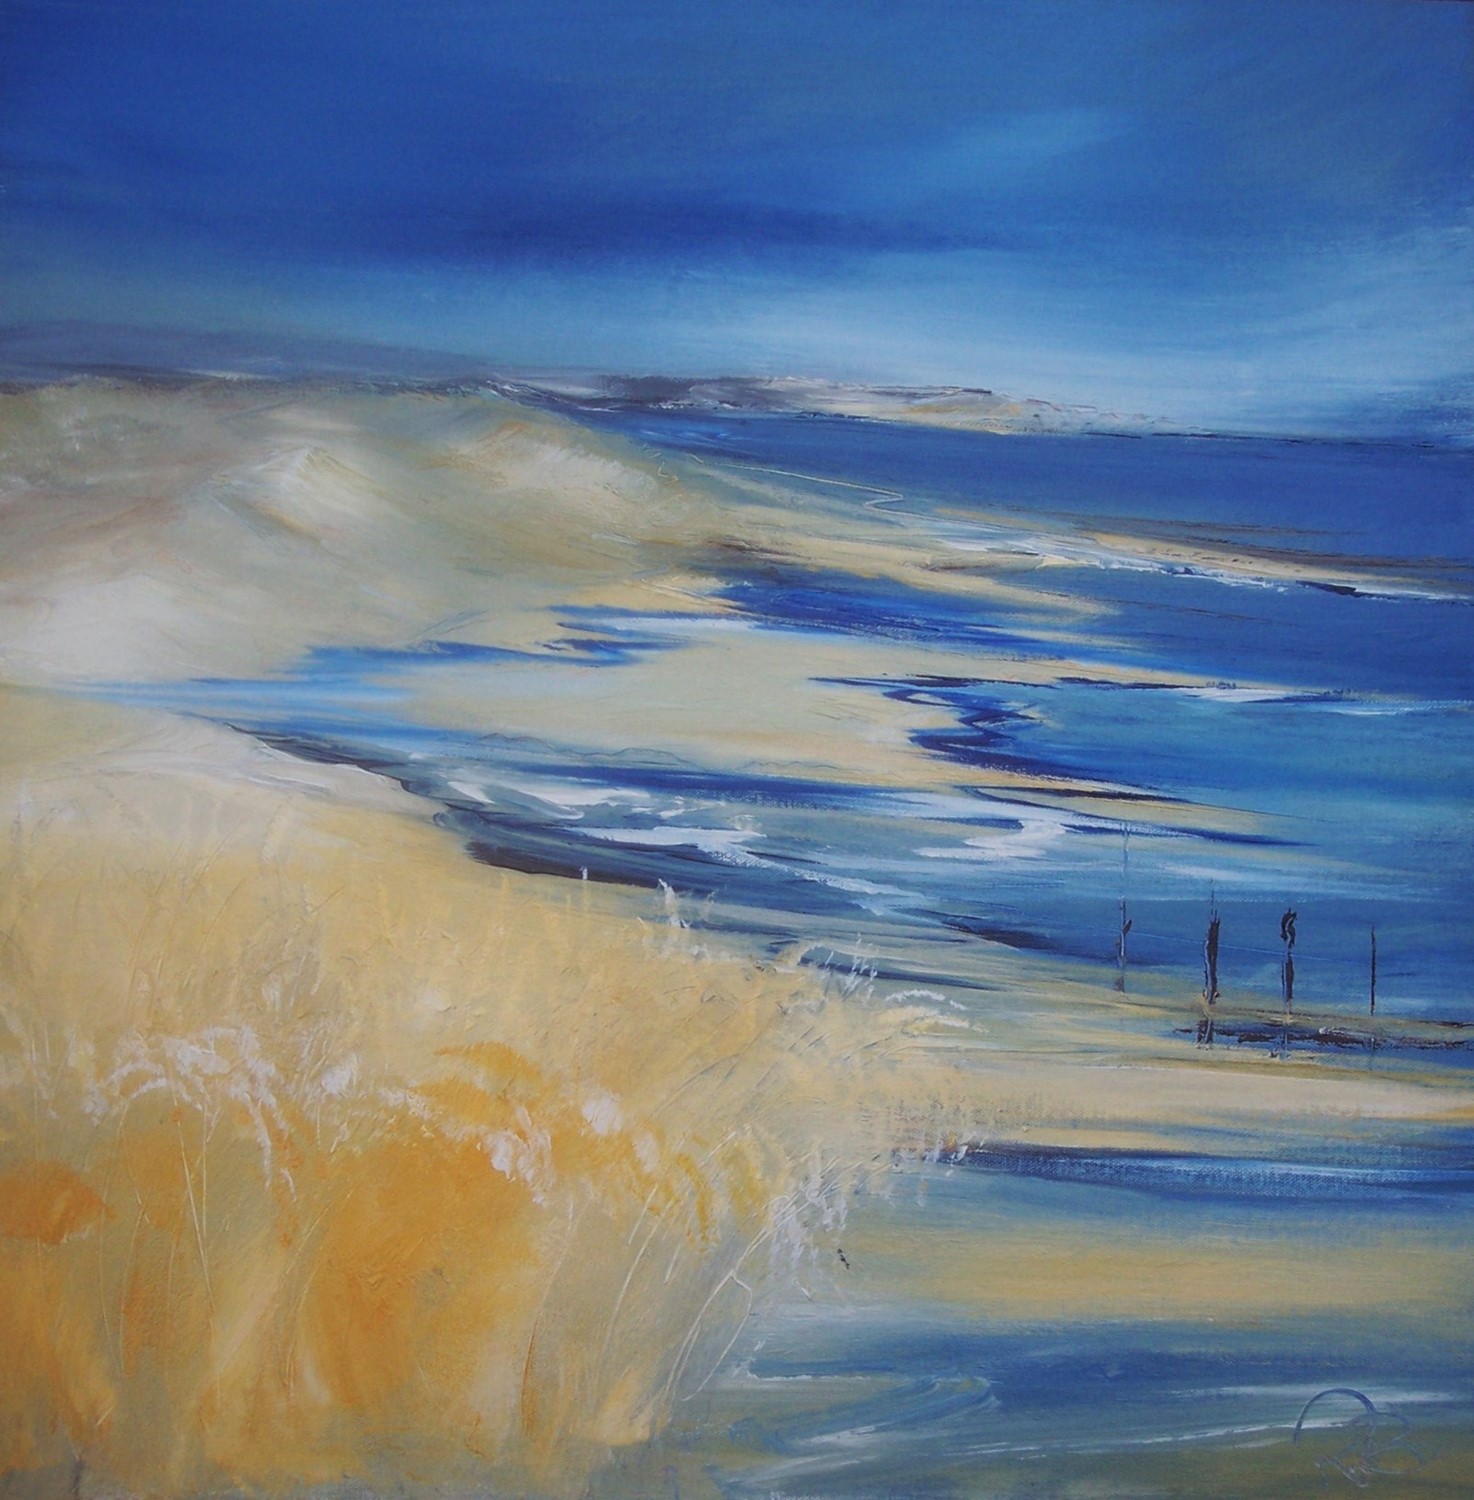 'Dune Bay' by artist Rosanne Barr